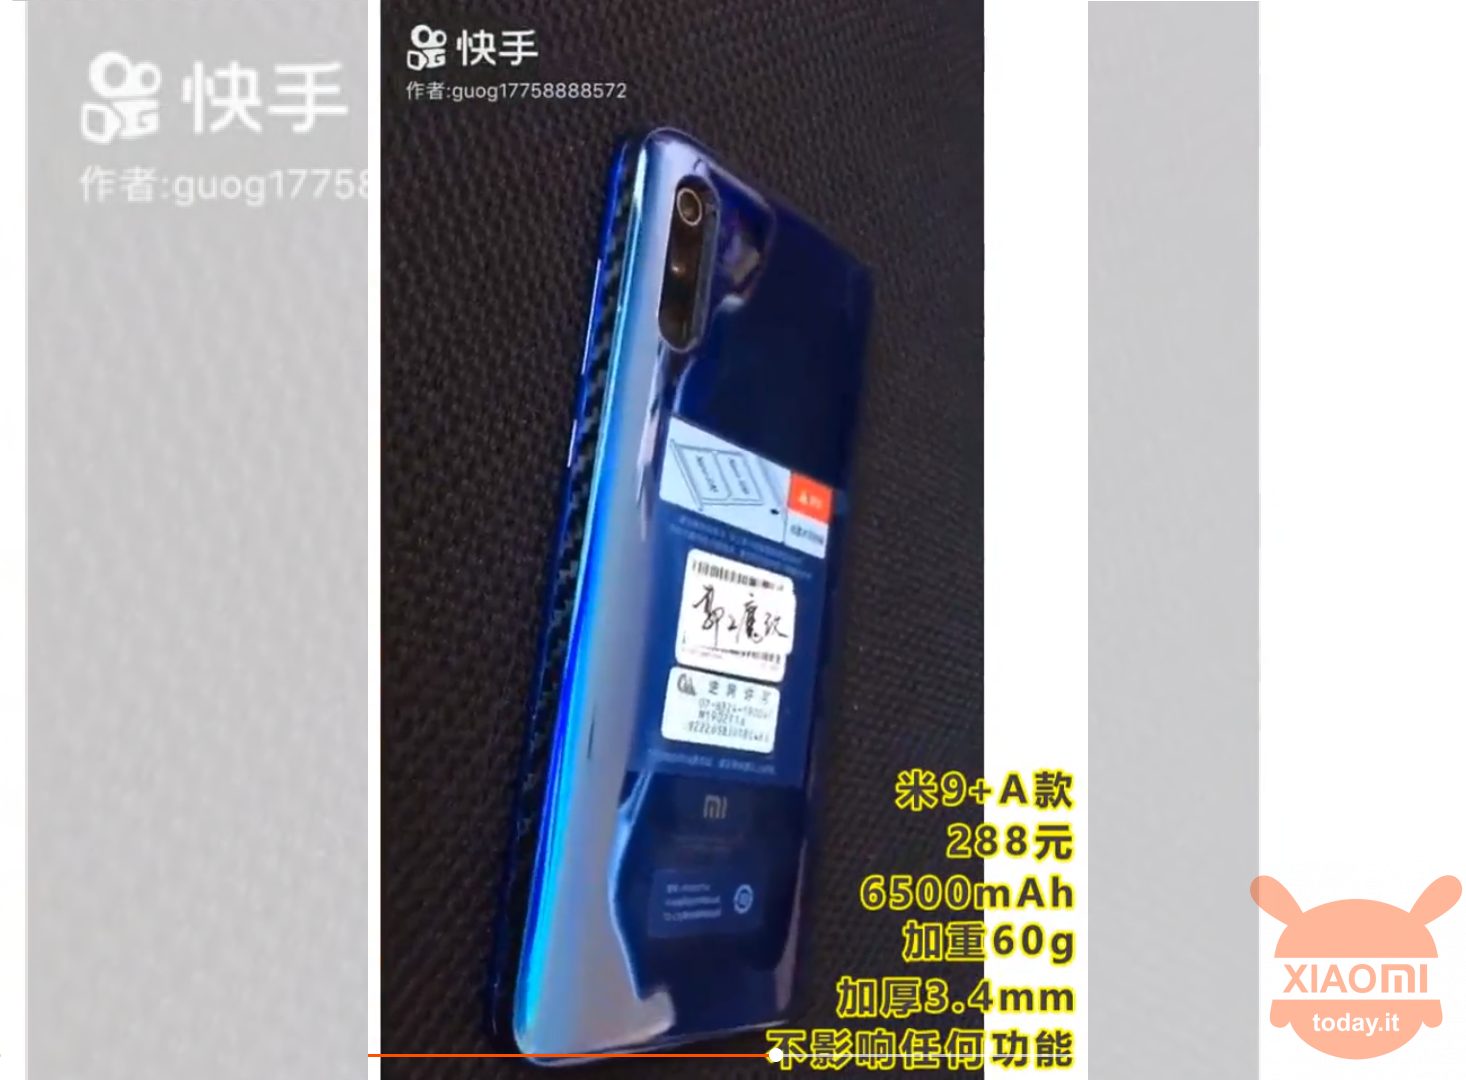 Xiaomi Mi 9 6500mAh batteri